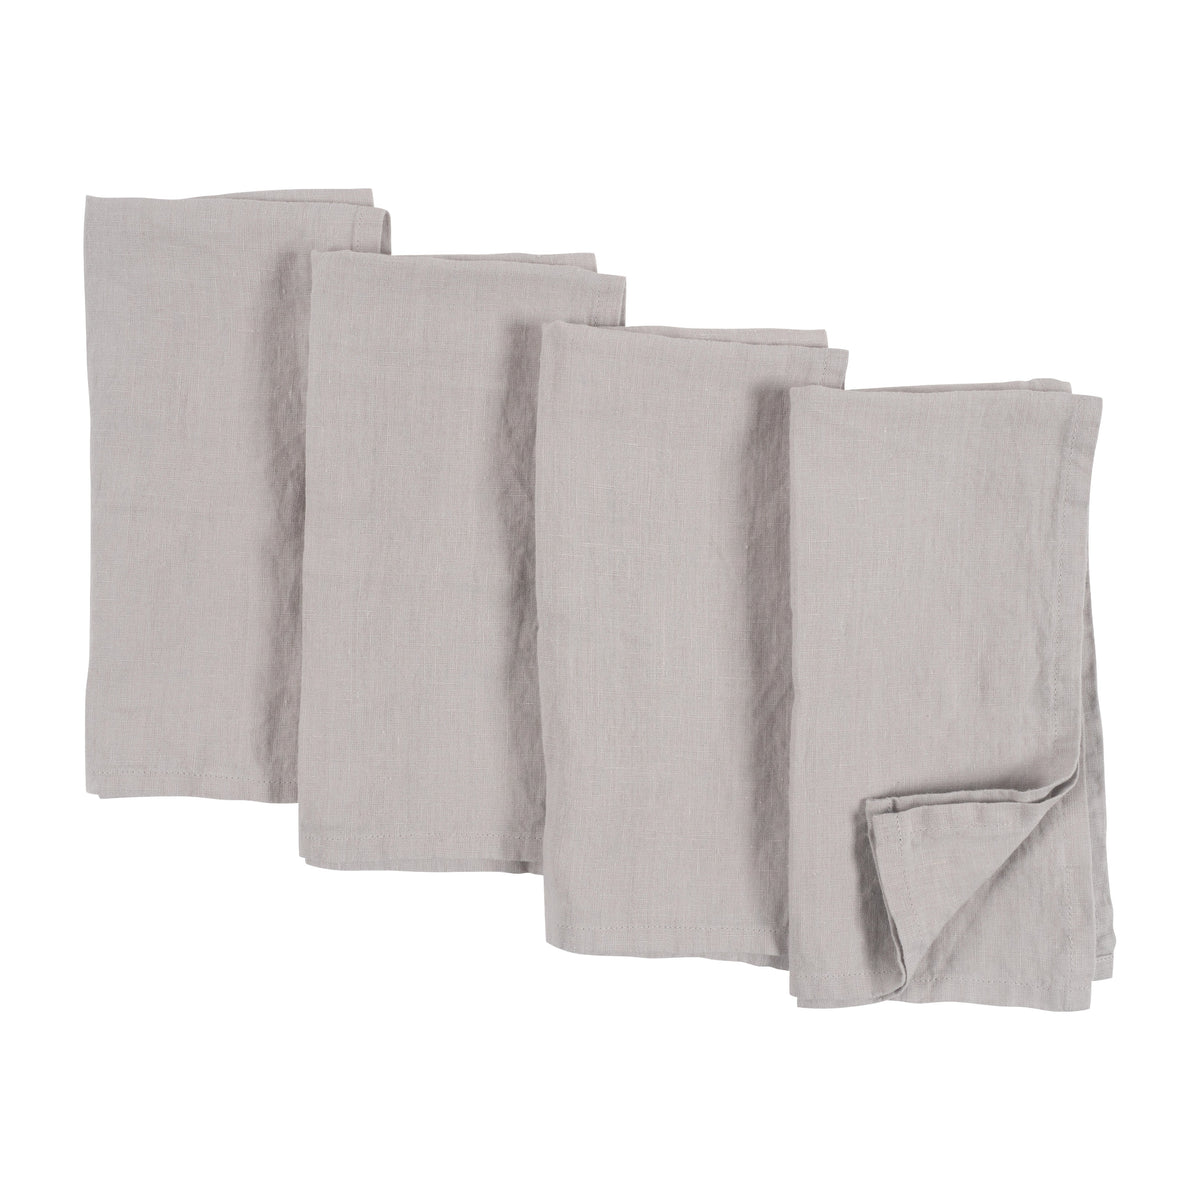 Washed Linen-Cotton set of 4 Napkins- White